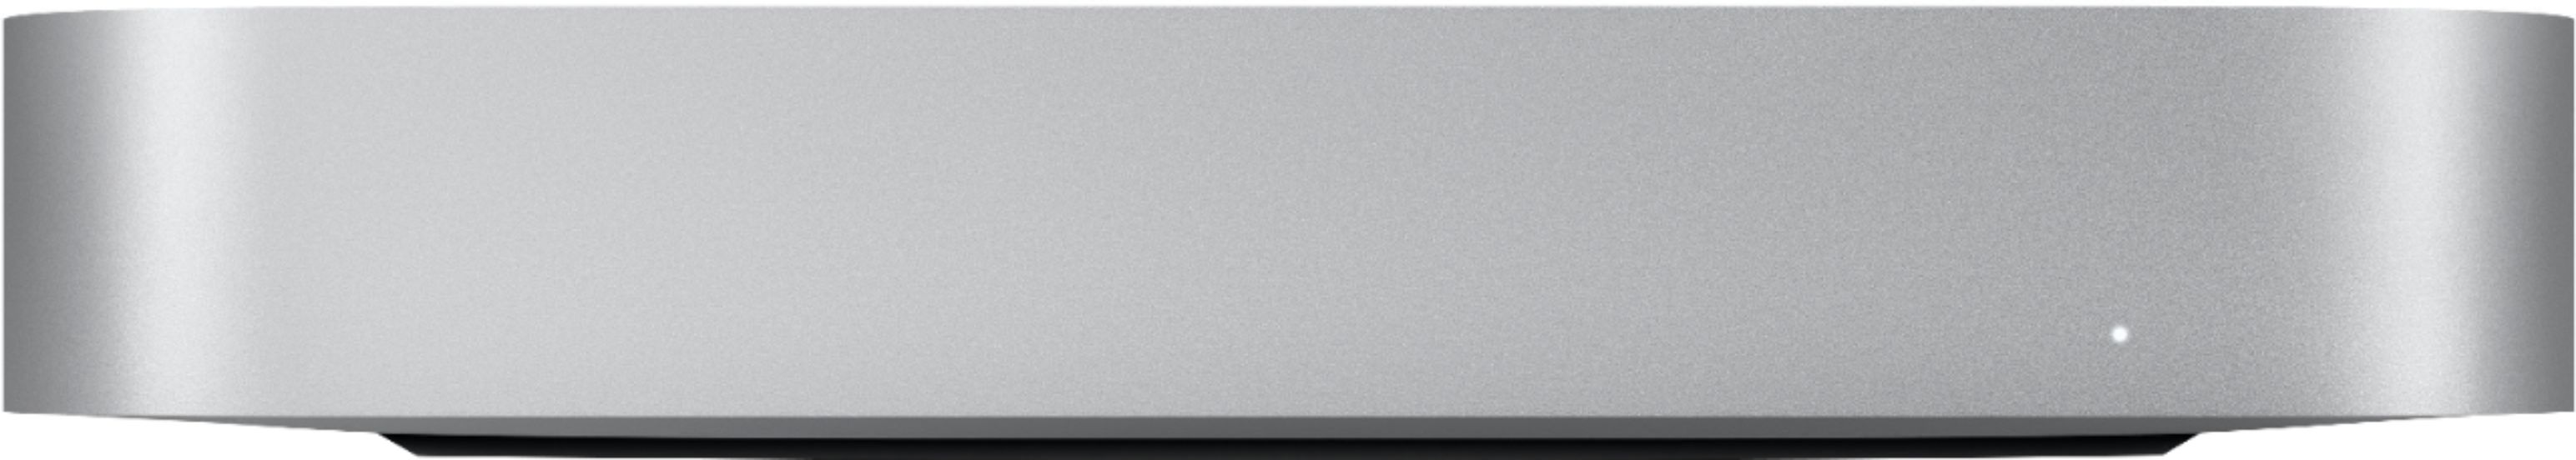 Best Buy: Mac mini Desktop Apple M1 chip 8GB Memory 512GB SSD